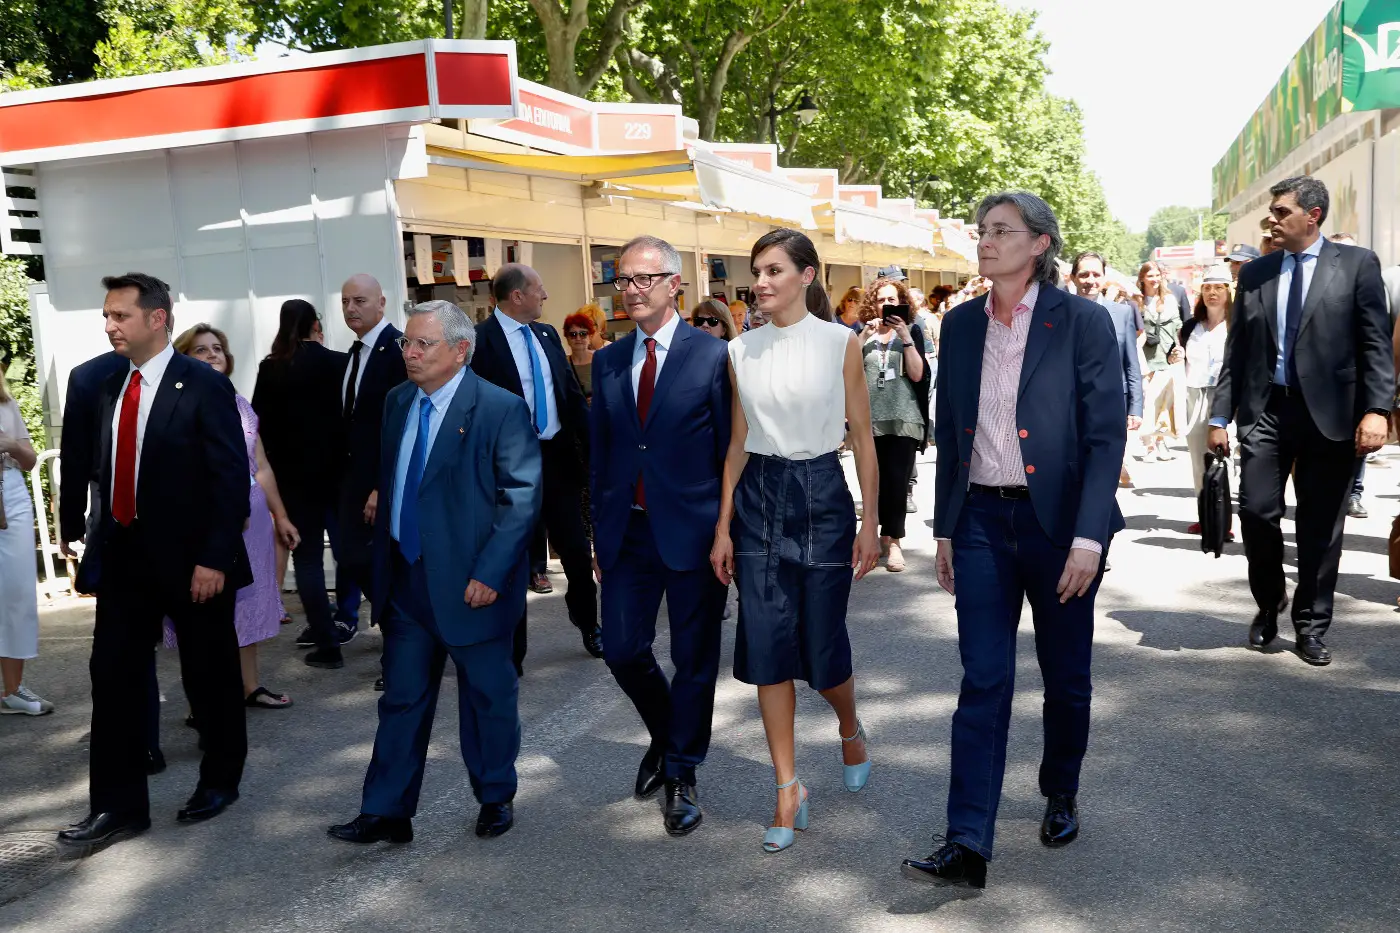 Queen Letizia wore a summer white top and blue denim skirt for madrid book fair 13